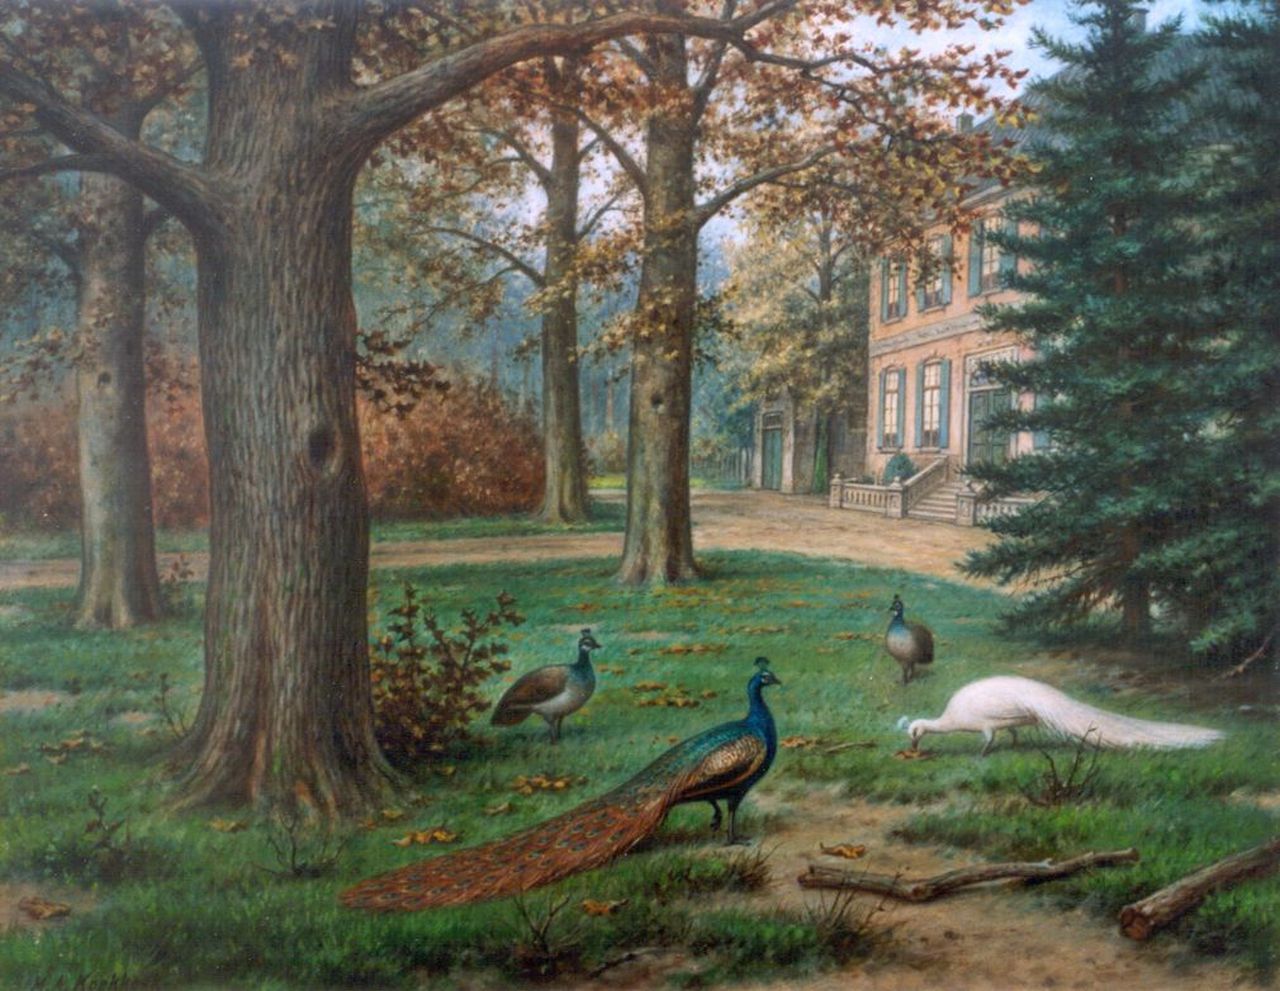 Koekkoek II M.A.  | Marinus Adrianus Koekkoek II, Peacocks in a landscape garden, Öl auf Leinwand 40,2 x 50,5 cm, signed l.l.